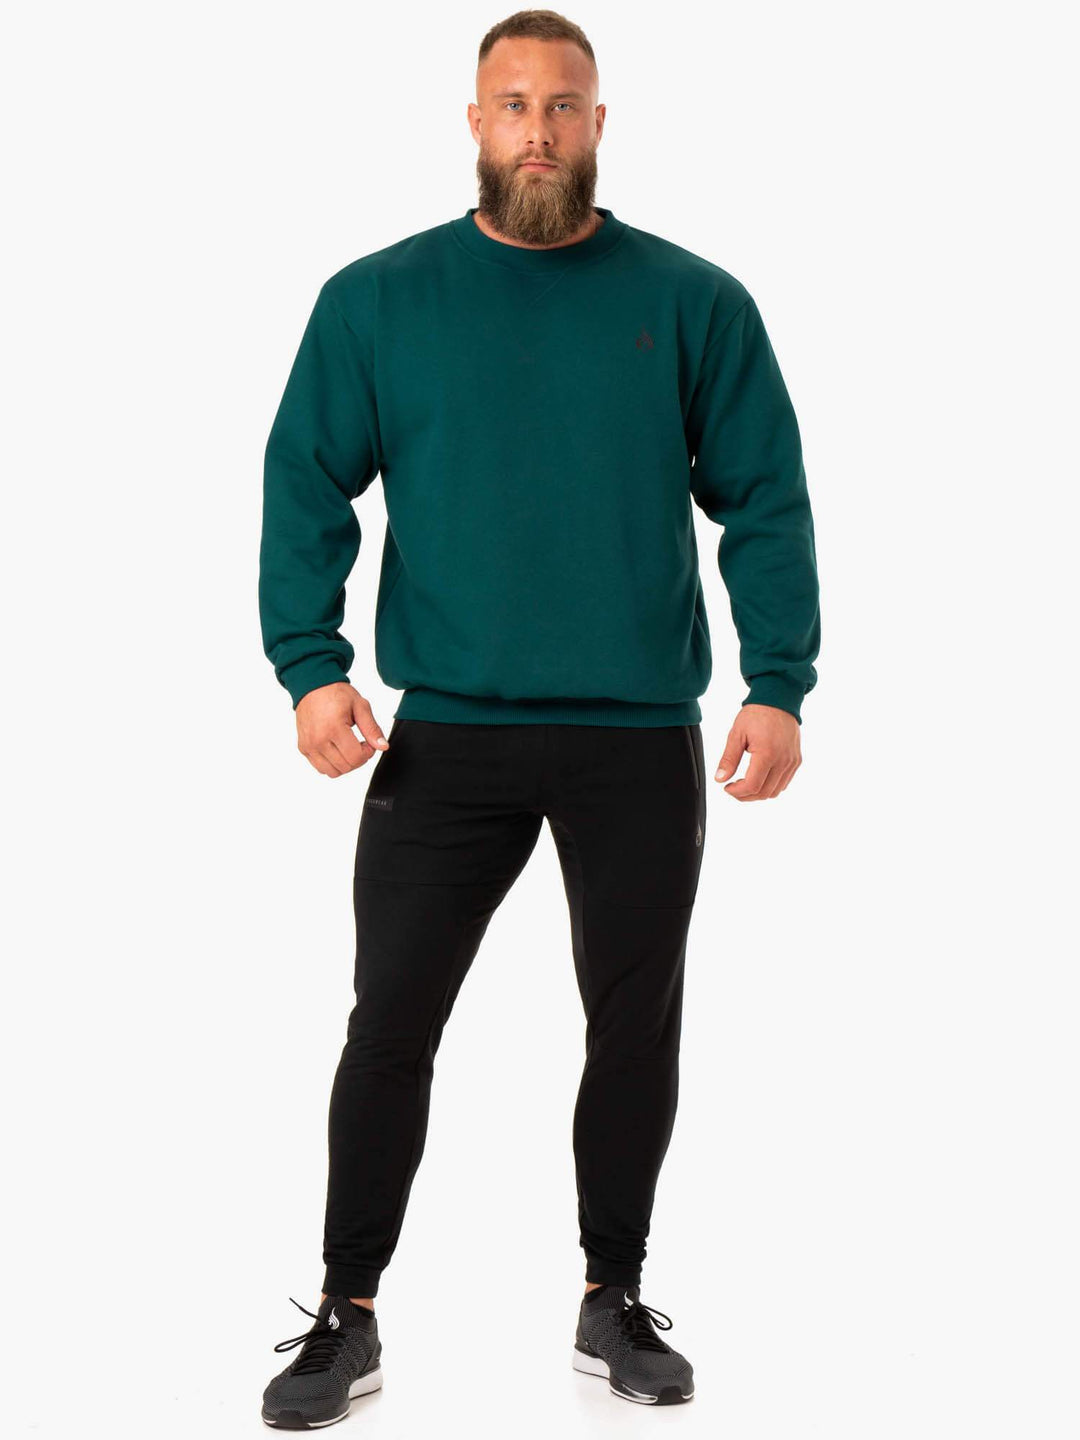 Reset Fleece Crew Neck - Emerald Clothing Ryderwear 